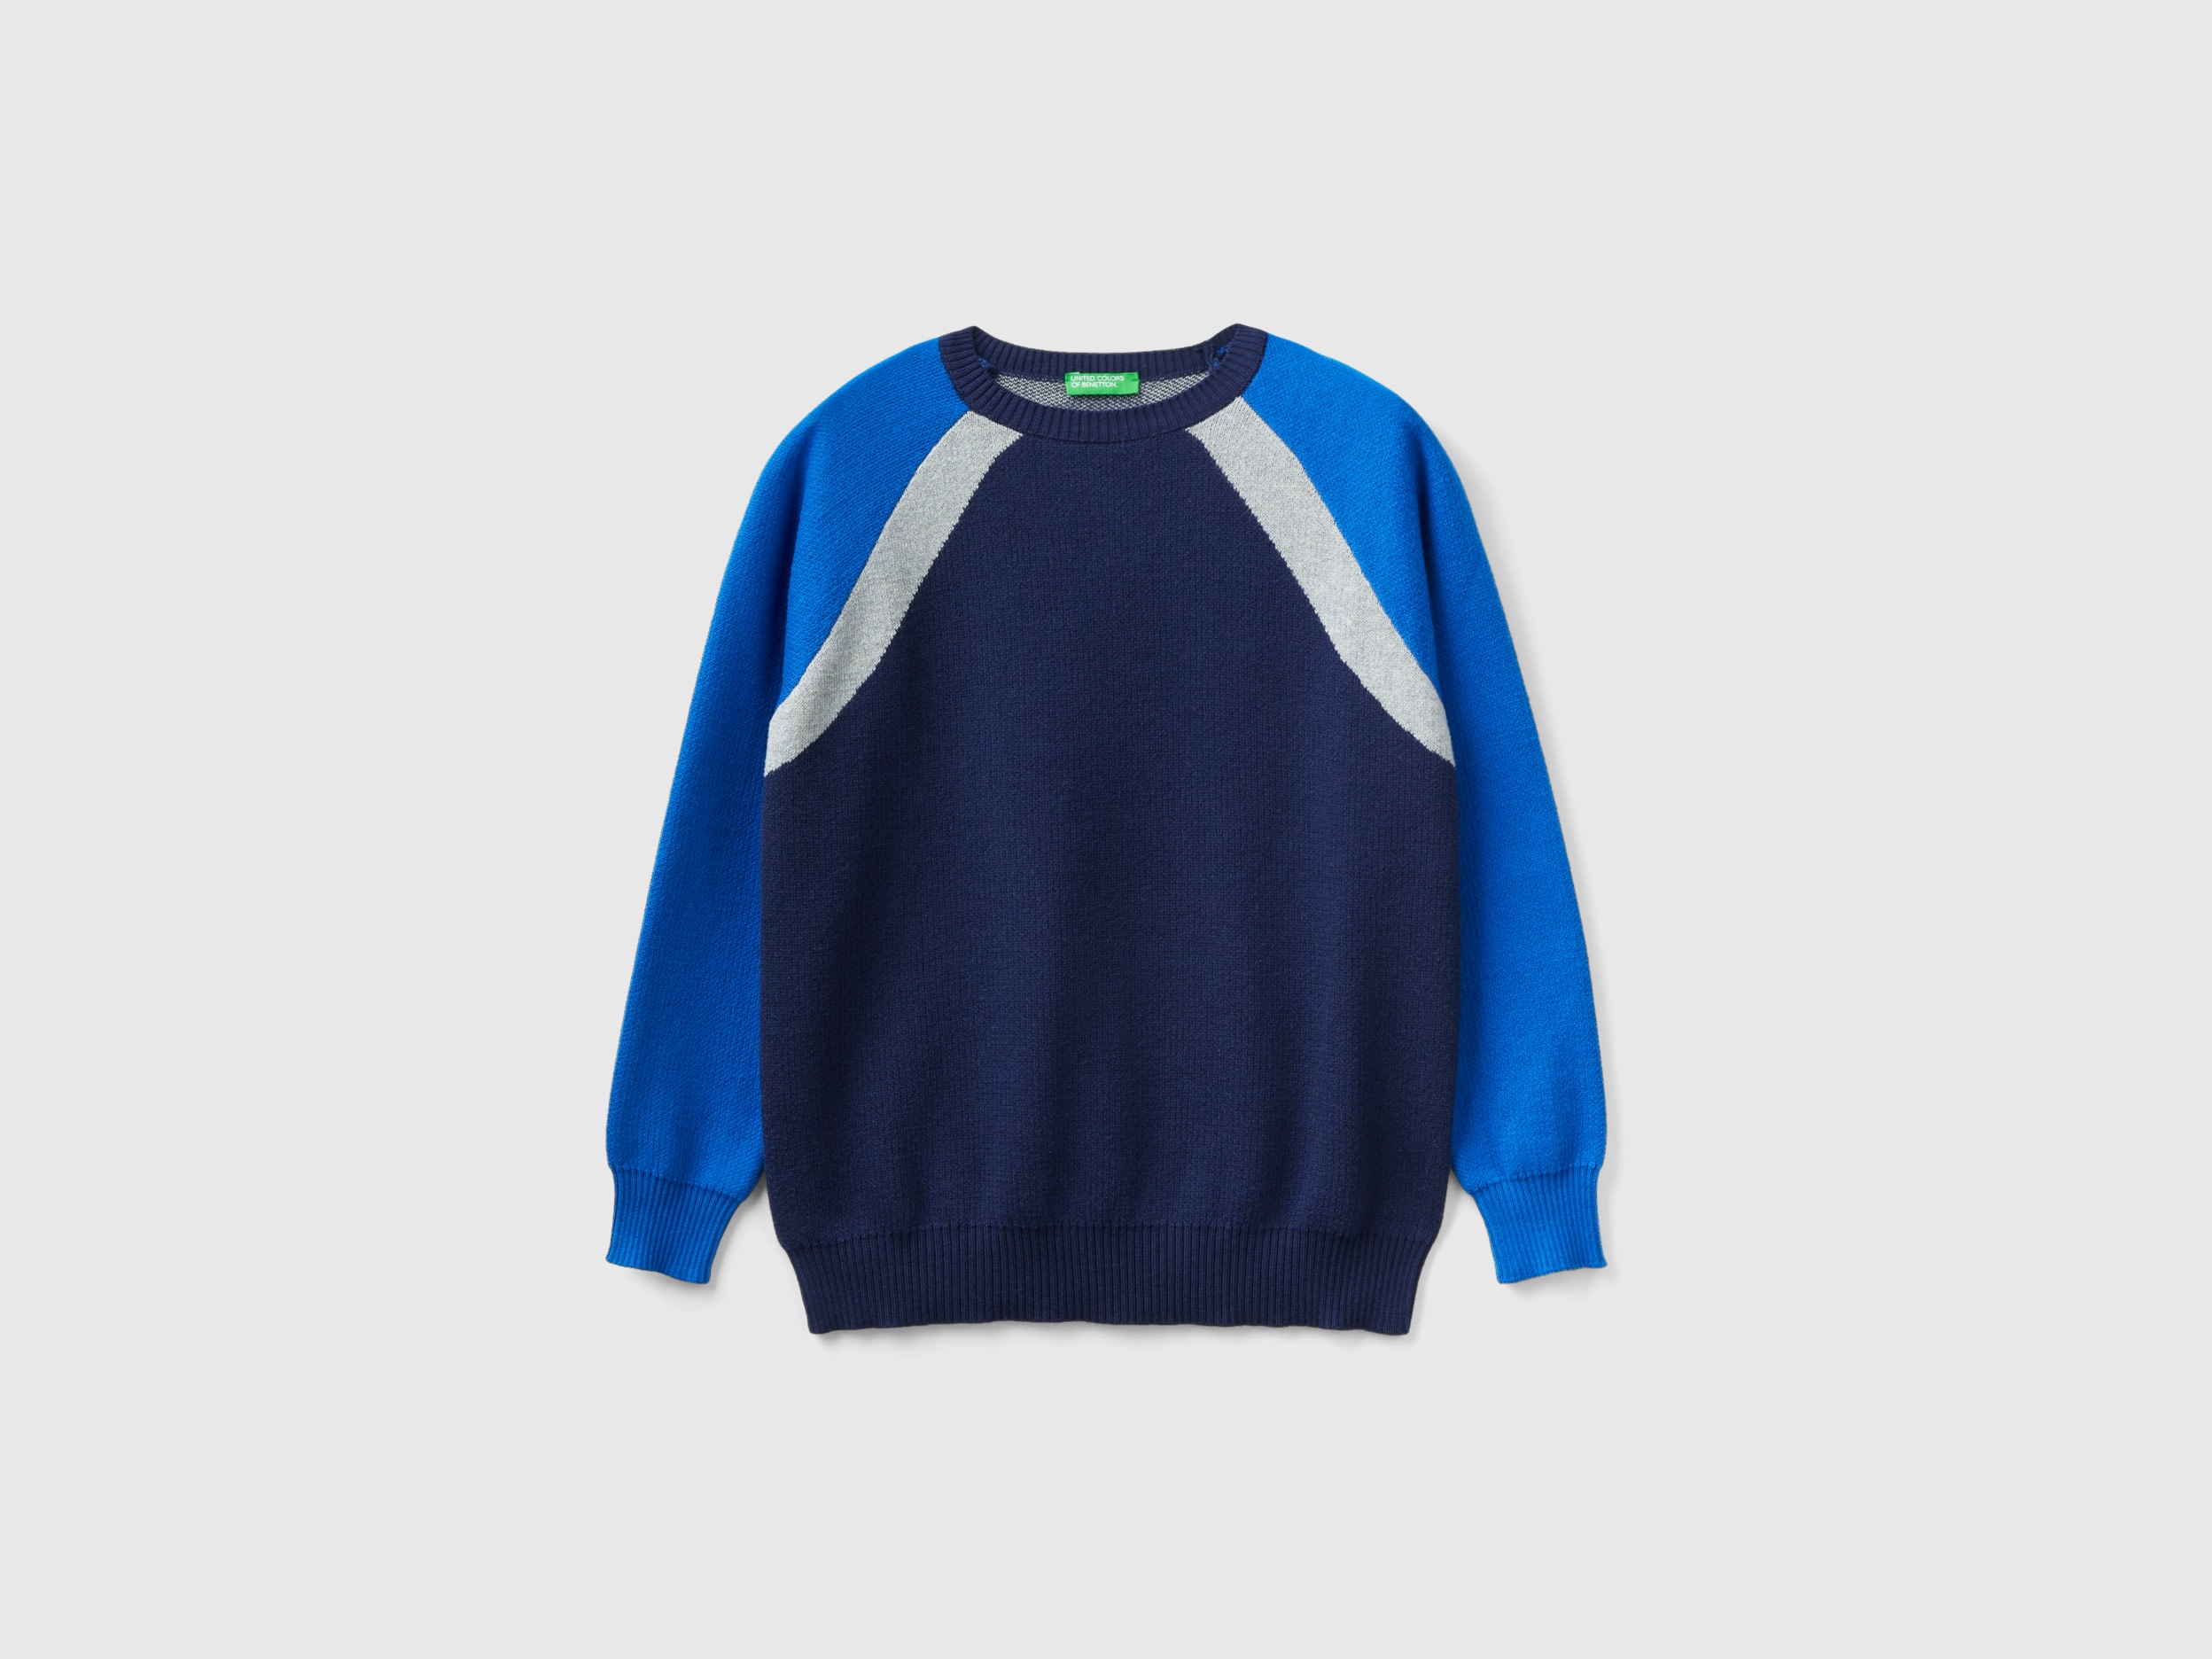 Benetton, 100% Cotton Color Block Sweater, size 3XL, Dark Blue, Kids